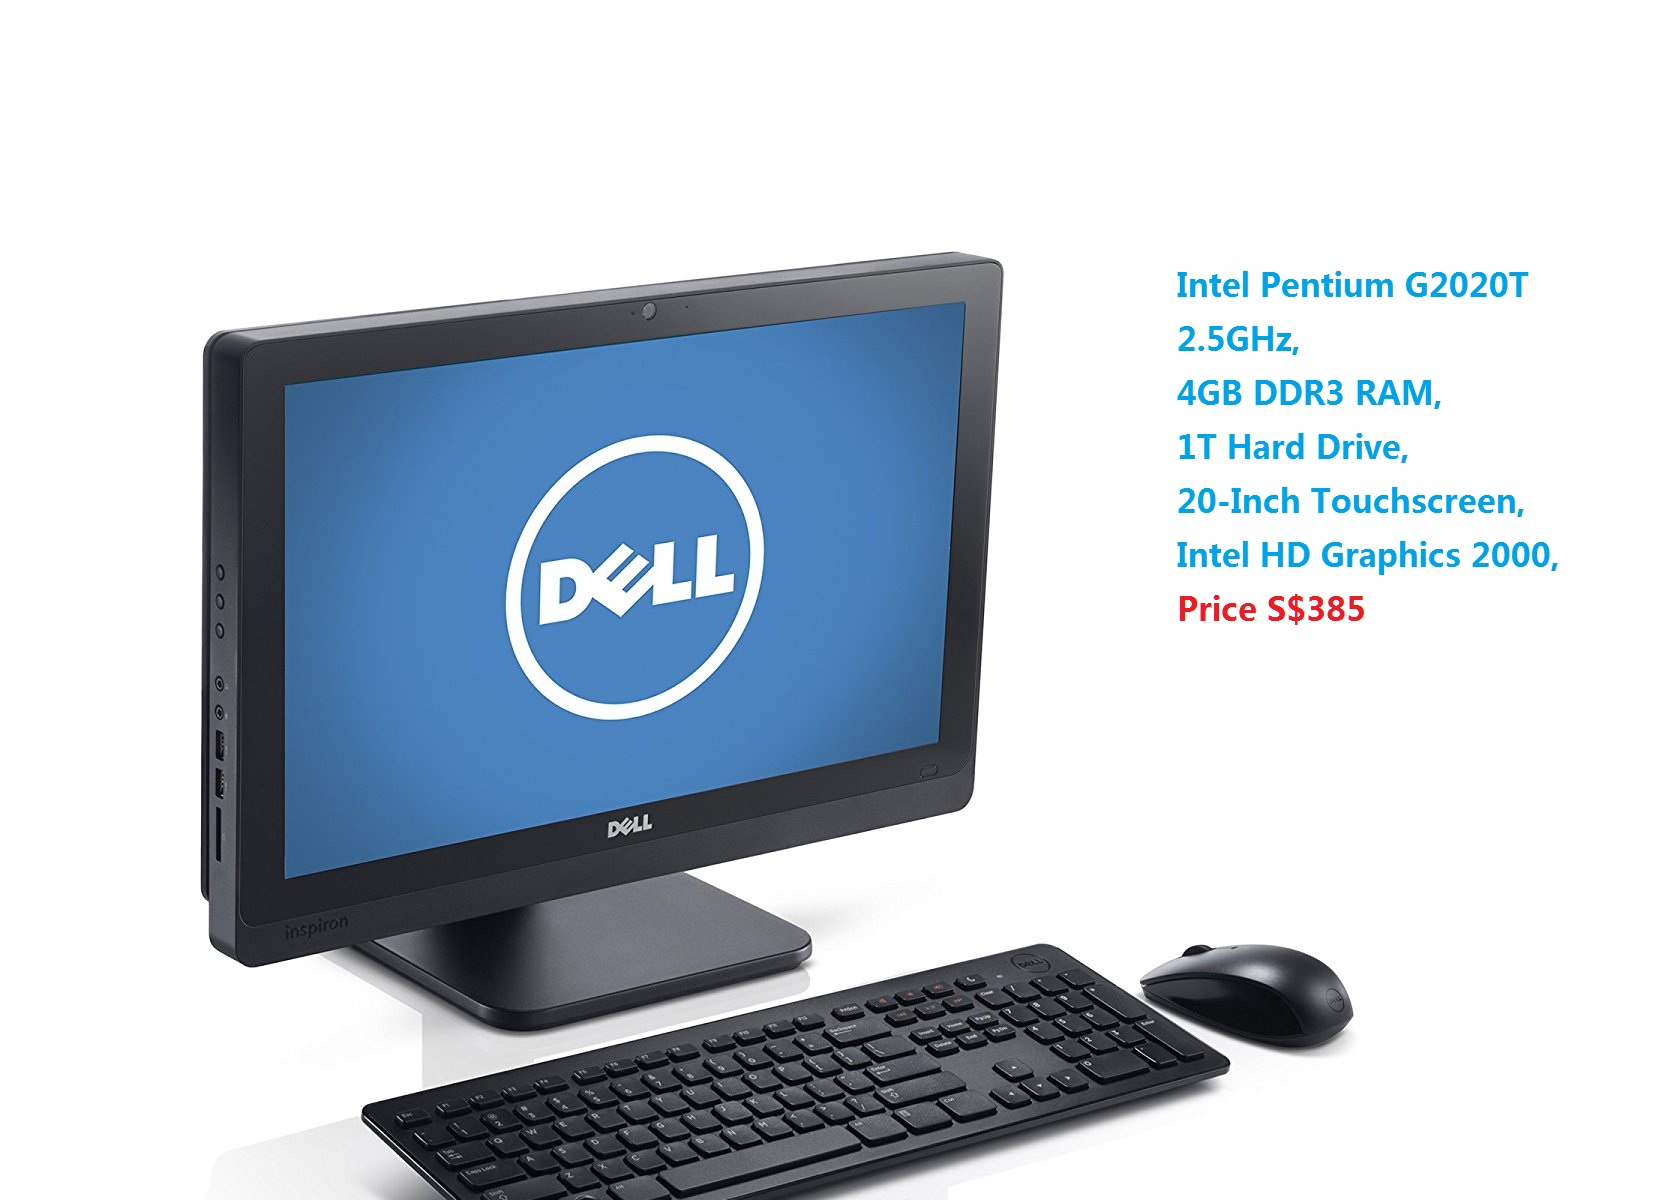 Dell Inspiron 2020 20in All-In-One Desktop PDC 2.5GHz 4GB 1TB DVDRW WiFi.jpg